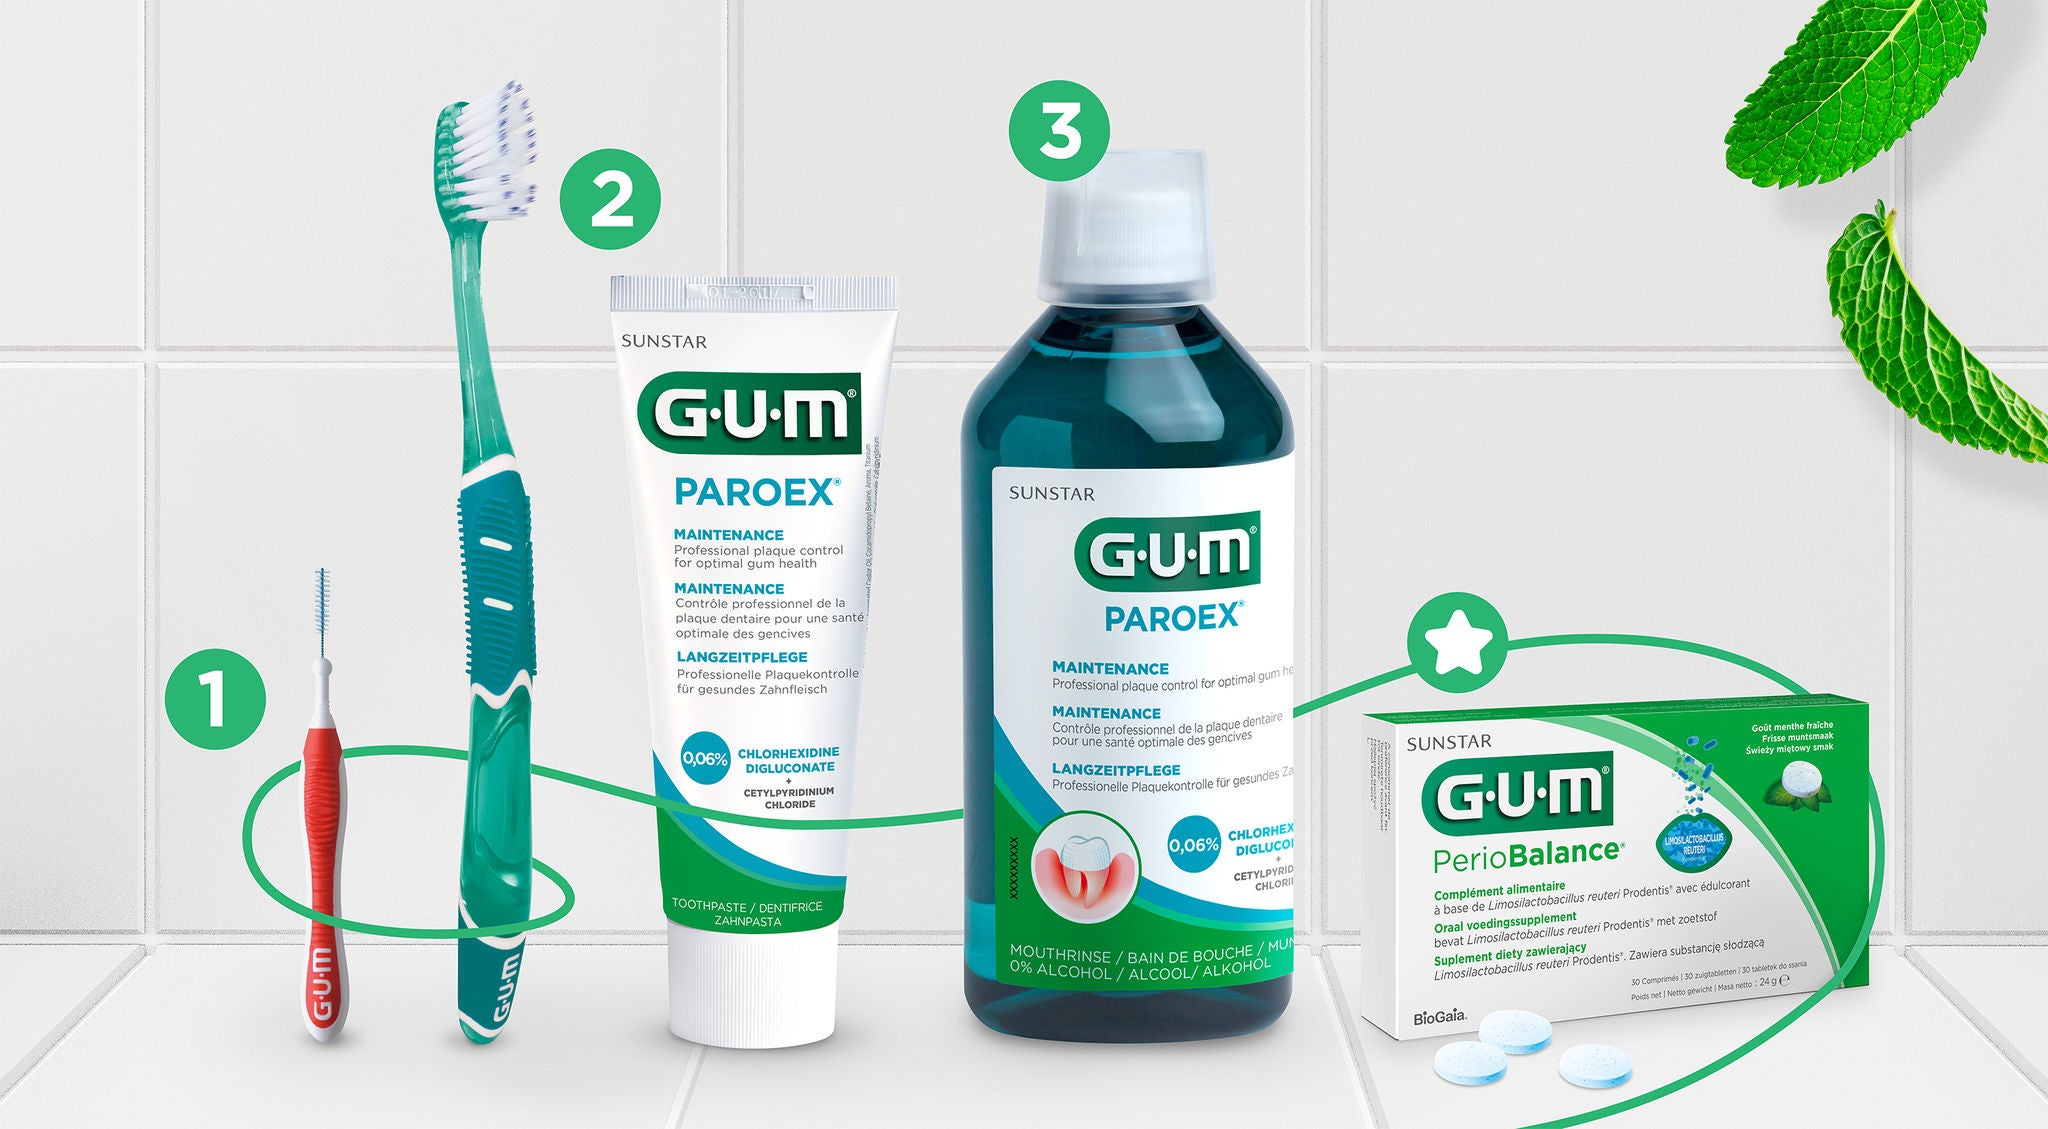 A complete self care with the GUM TRAV-LER interdental brushl, GUM PRO soft manual toothbrush and GUM PAROEX Maintenance toothpaste, GUM PAROEX Maintenance Mouthwash, GUM PerioBalance 